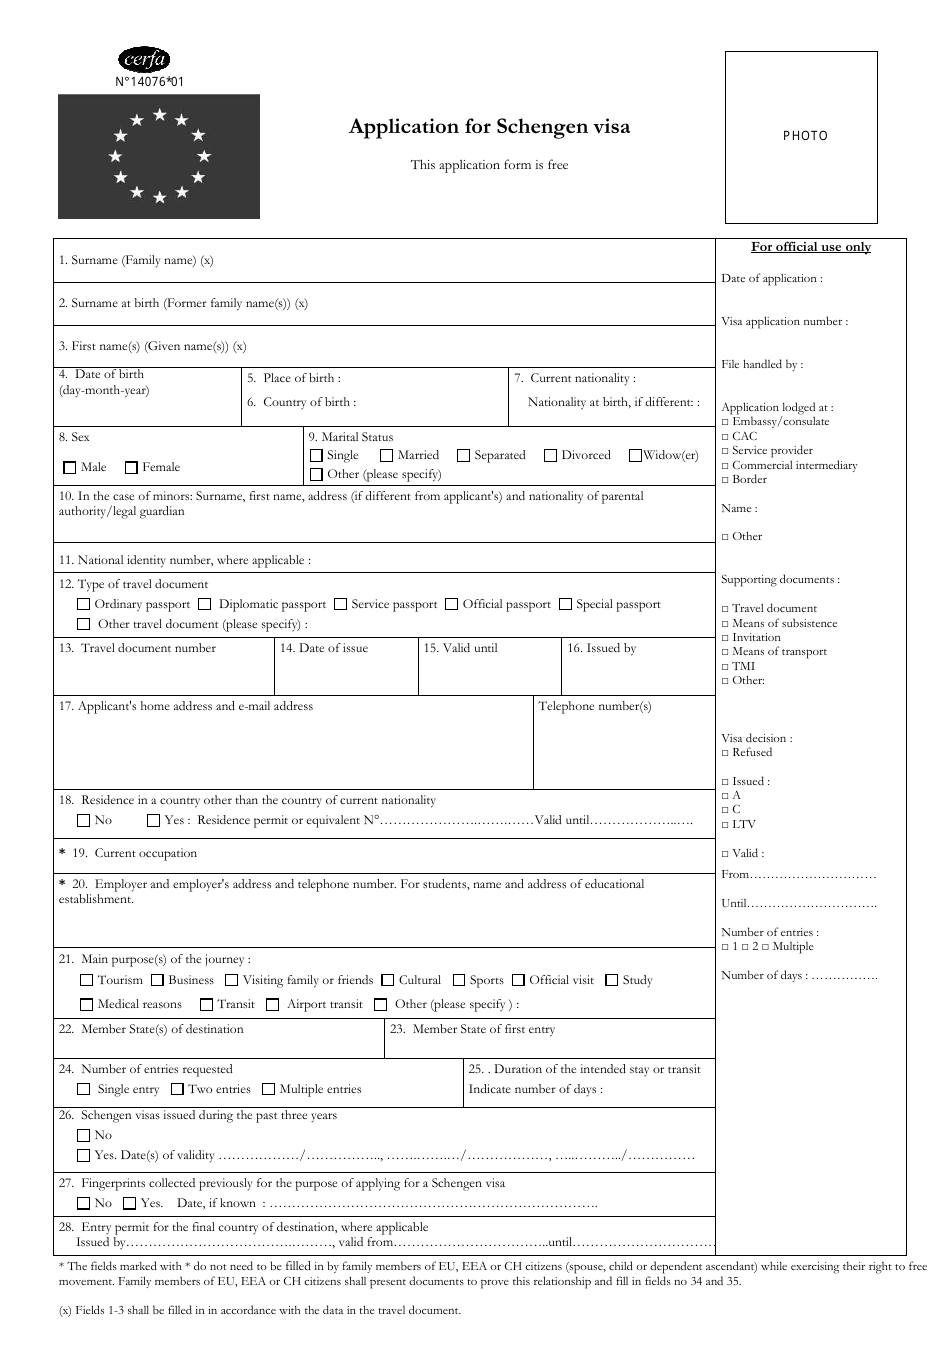 Shengen Visa Application Form - Paris, Metropolitan France, Page 1